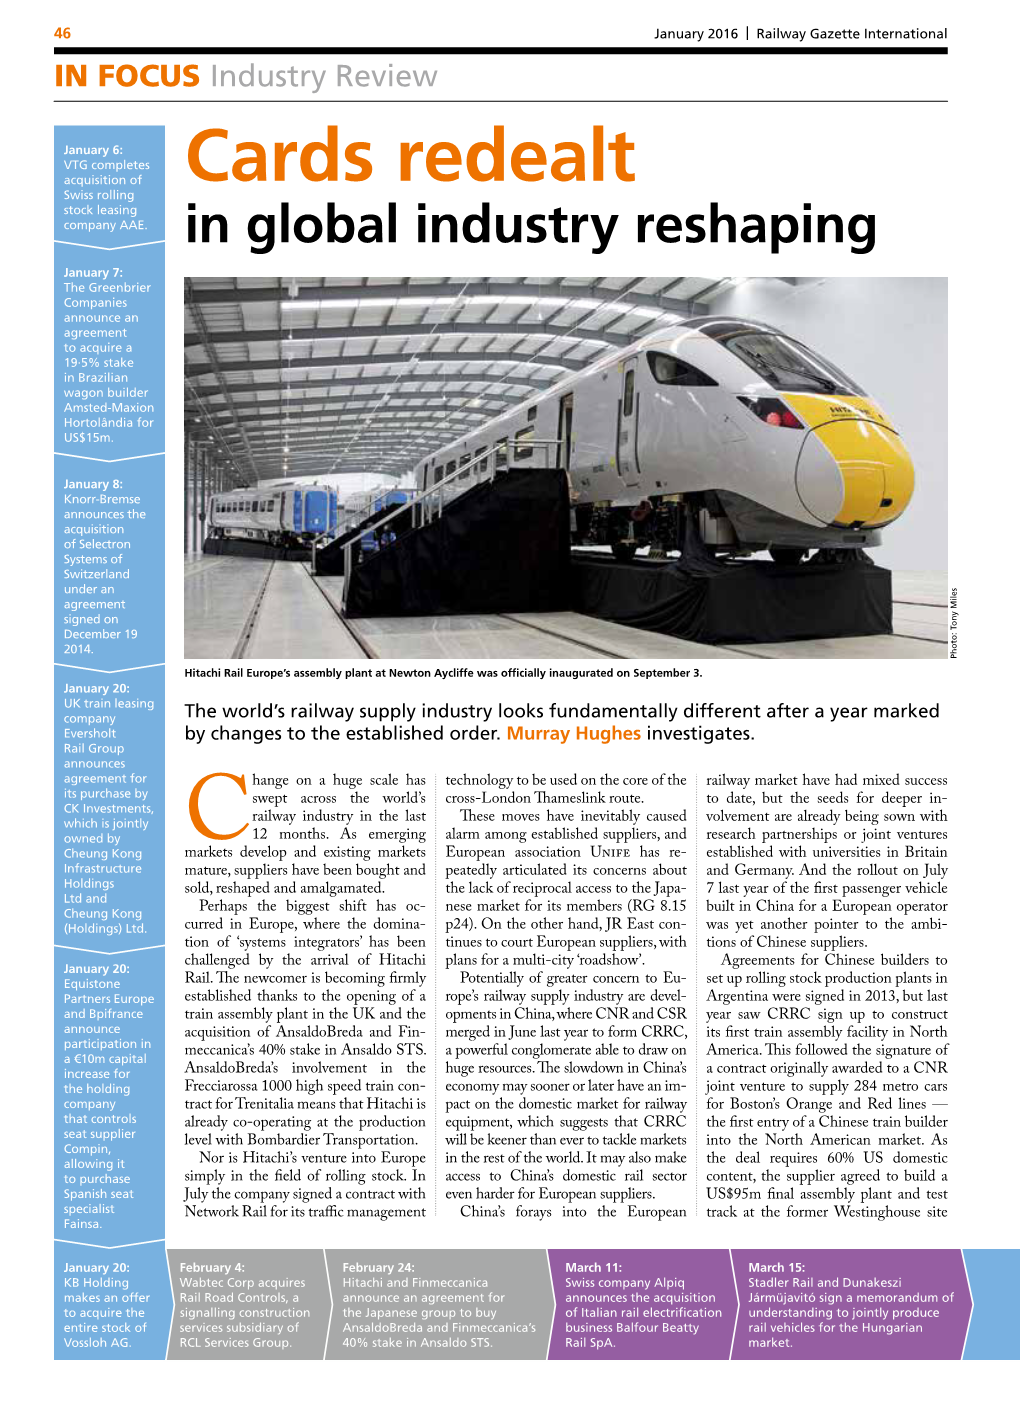 Cards Redealt in Global Industry Reshaping (Railway Gazette)